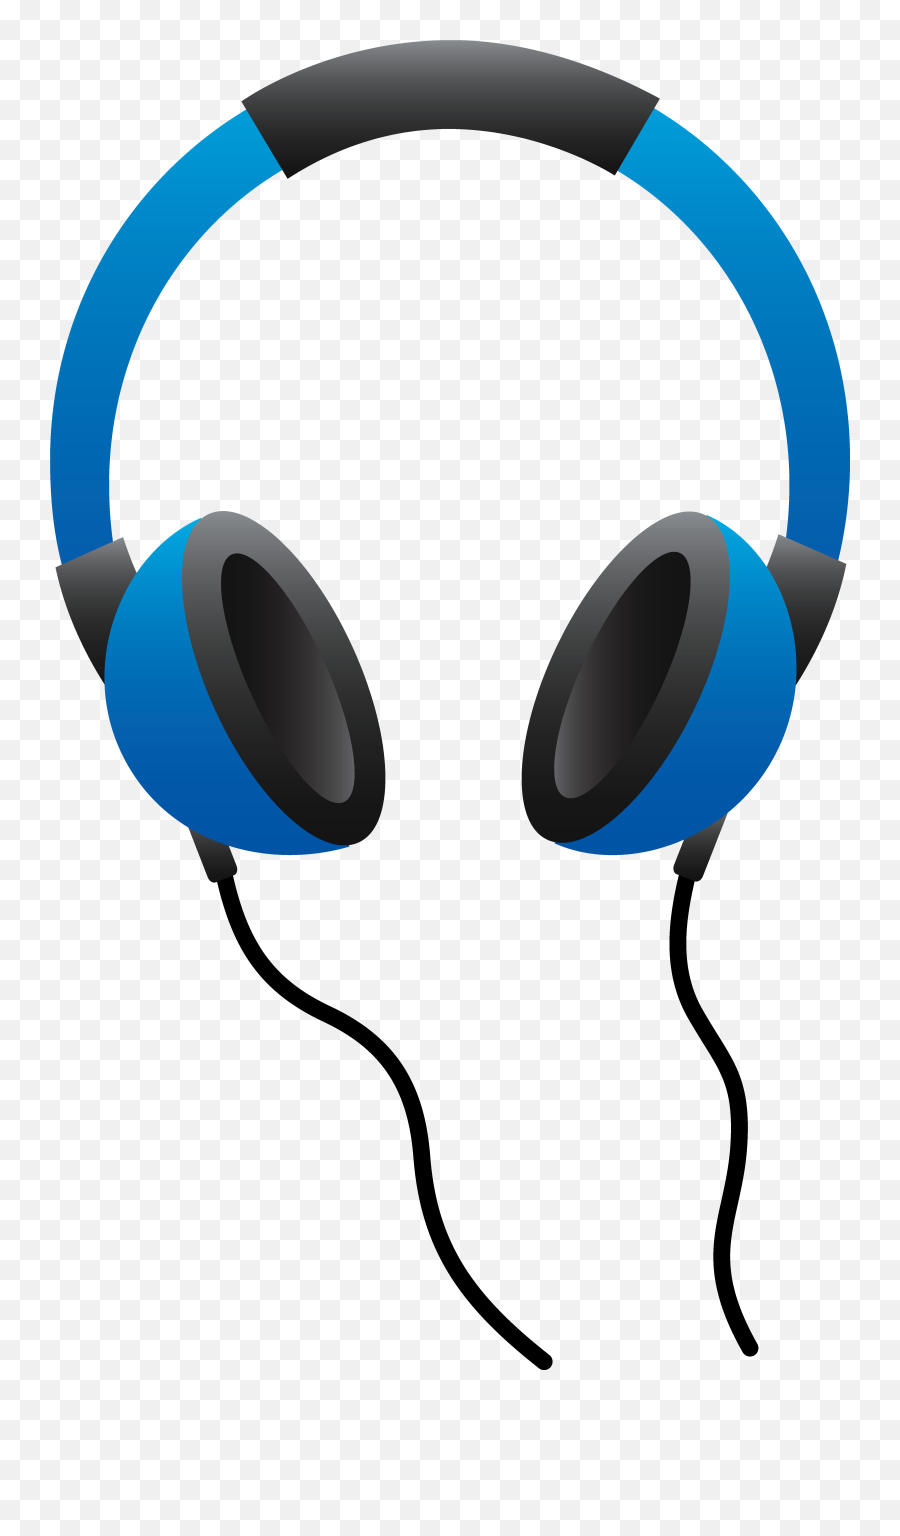 Colorful Big Headphones Clipart Free Image - Clip Art Headphones Emoji,Headphones Clipart